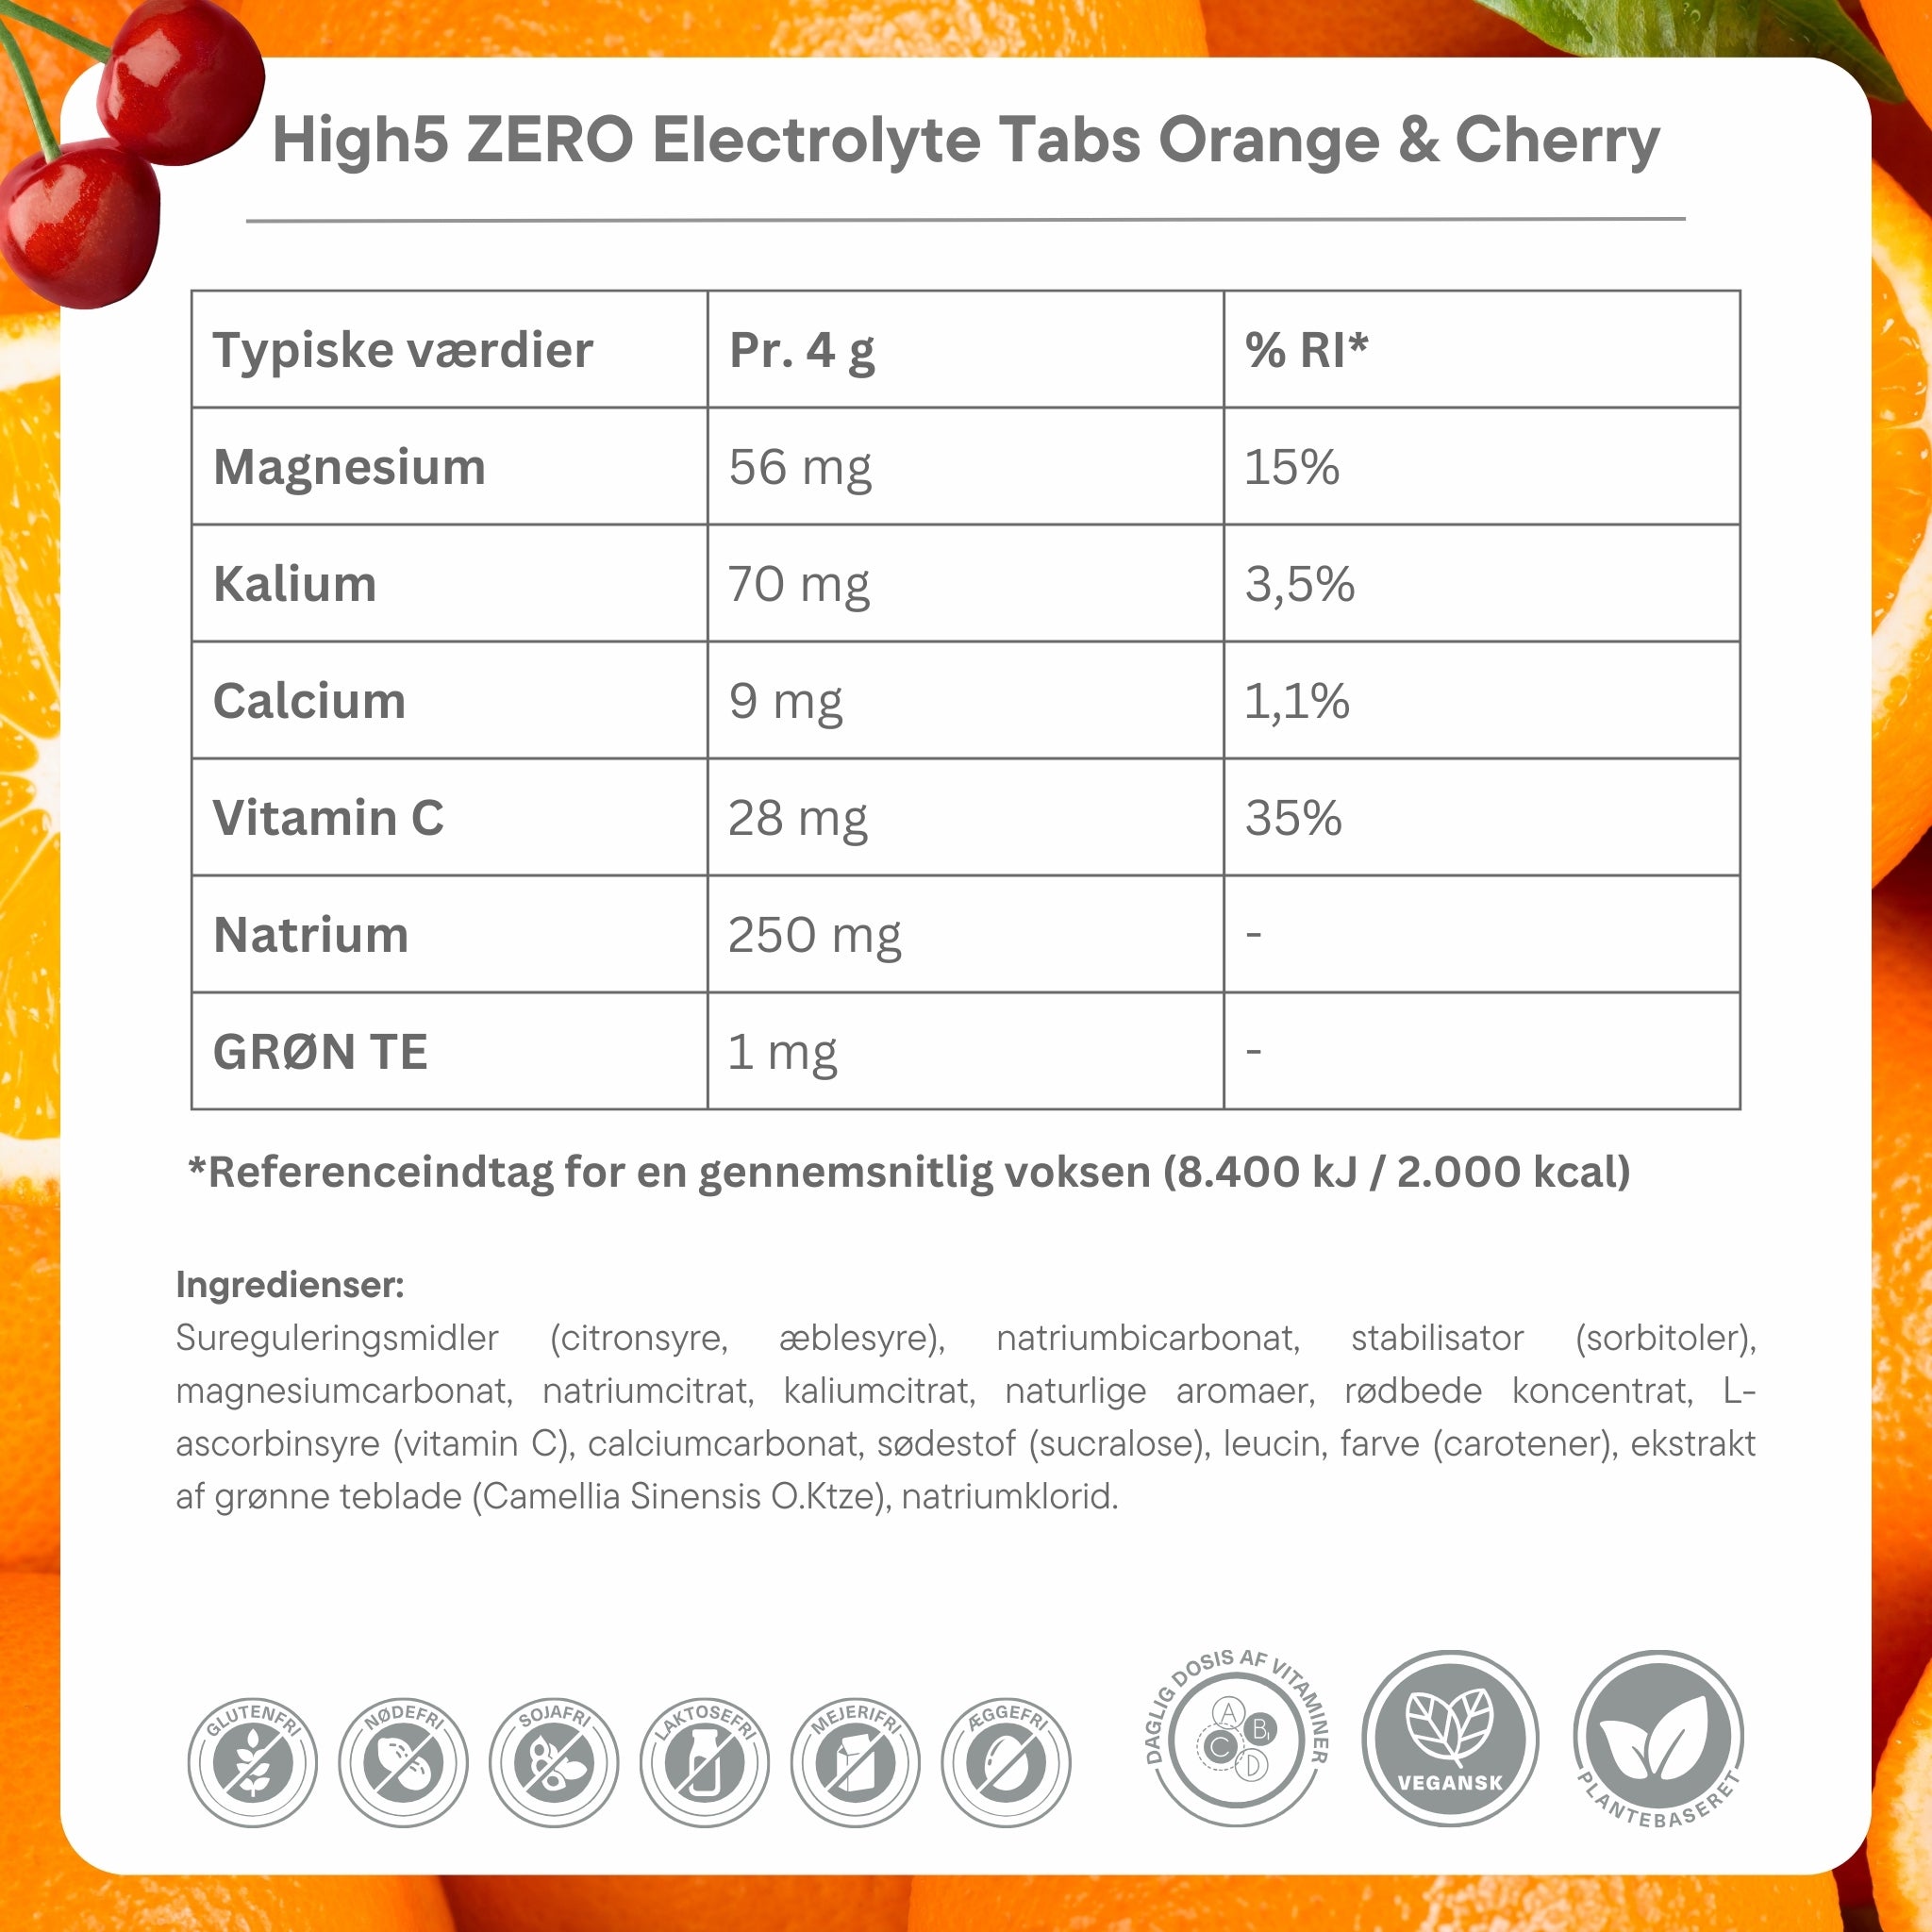 High5 ZERO Electrolyte Tabs Orange & Cherry Ingredients DK - pack - datovare